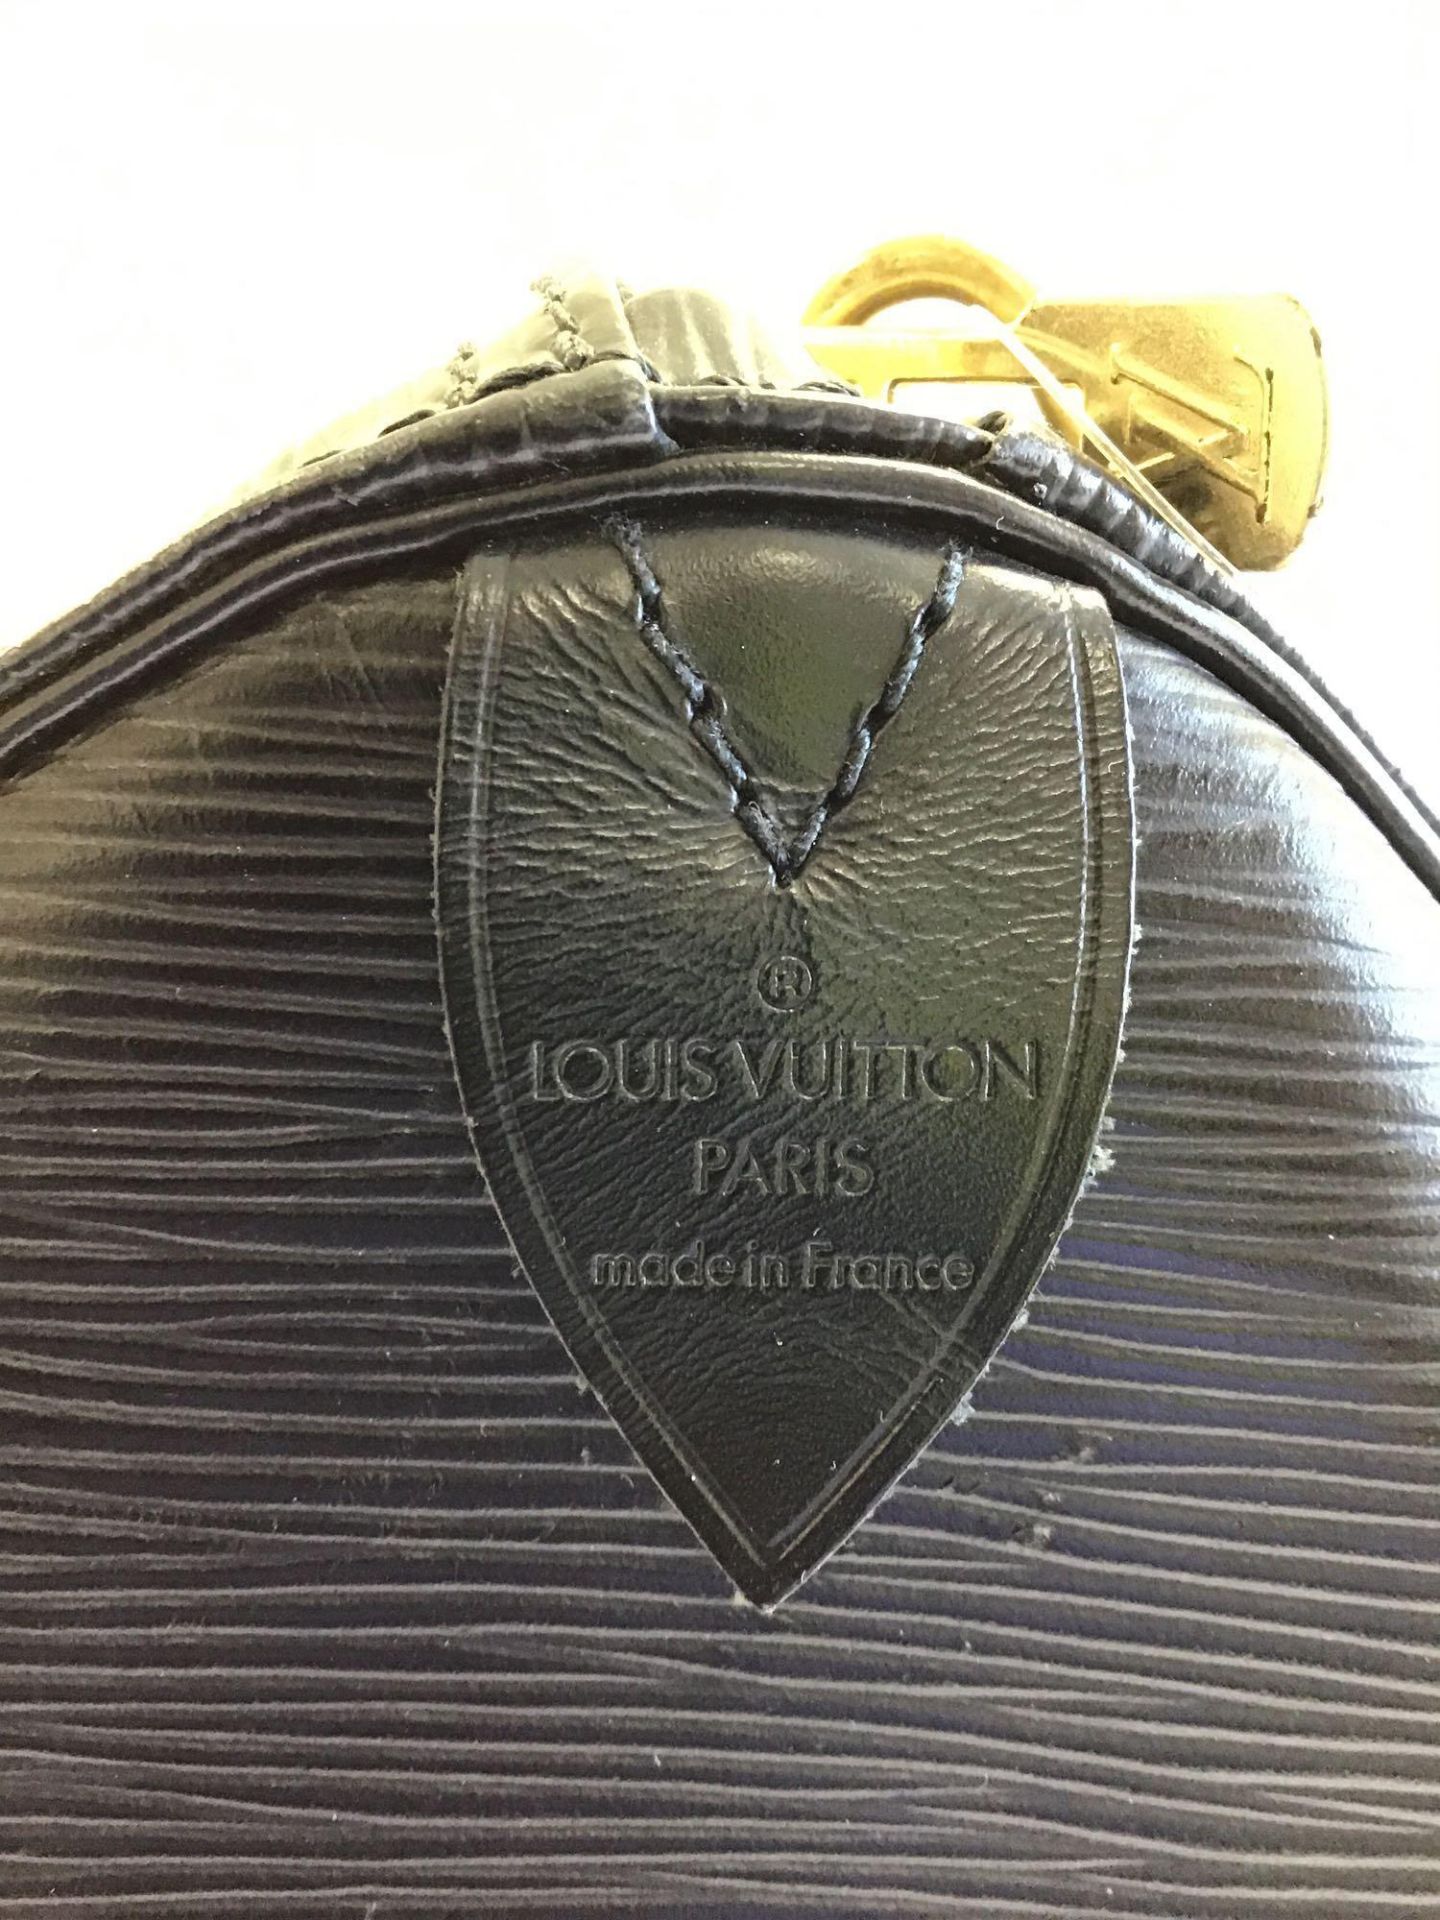 Louis Vuitton Black Keepall Travel Bag - Image 5 of 12